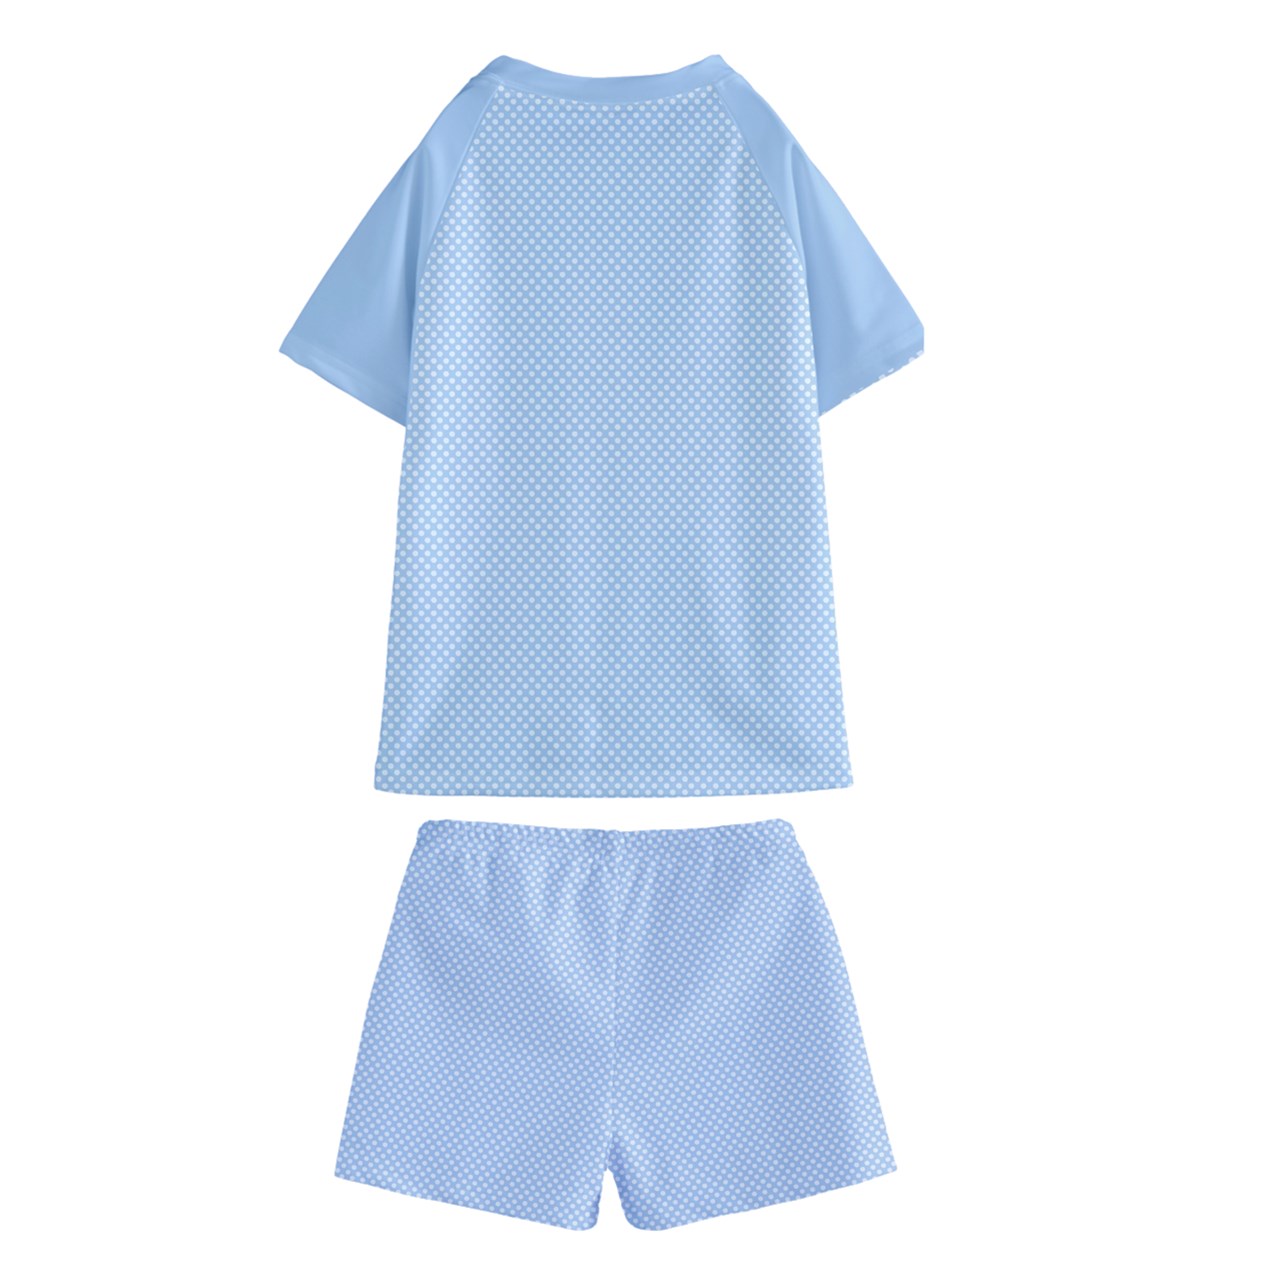 Vampire Art Kids' Swim T-Shirt and Shorts Set - Pale Blue Retro Polka Dot